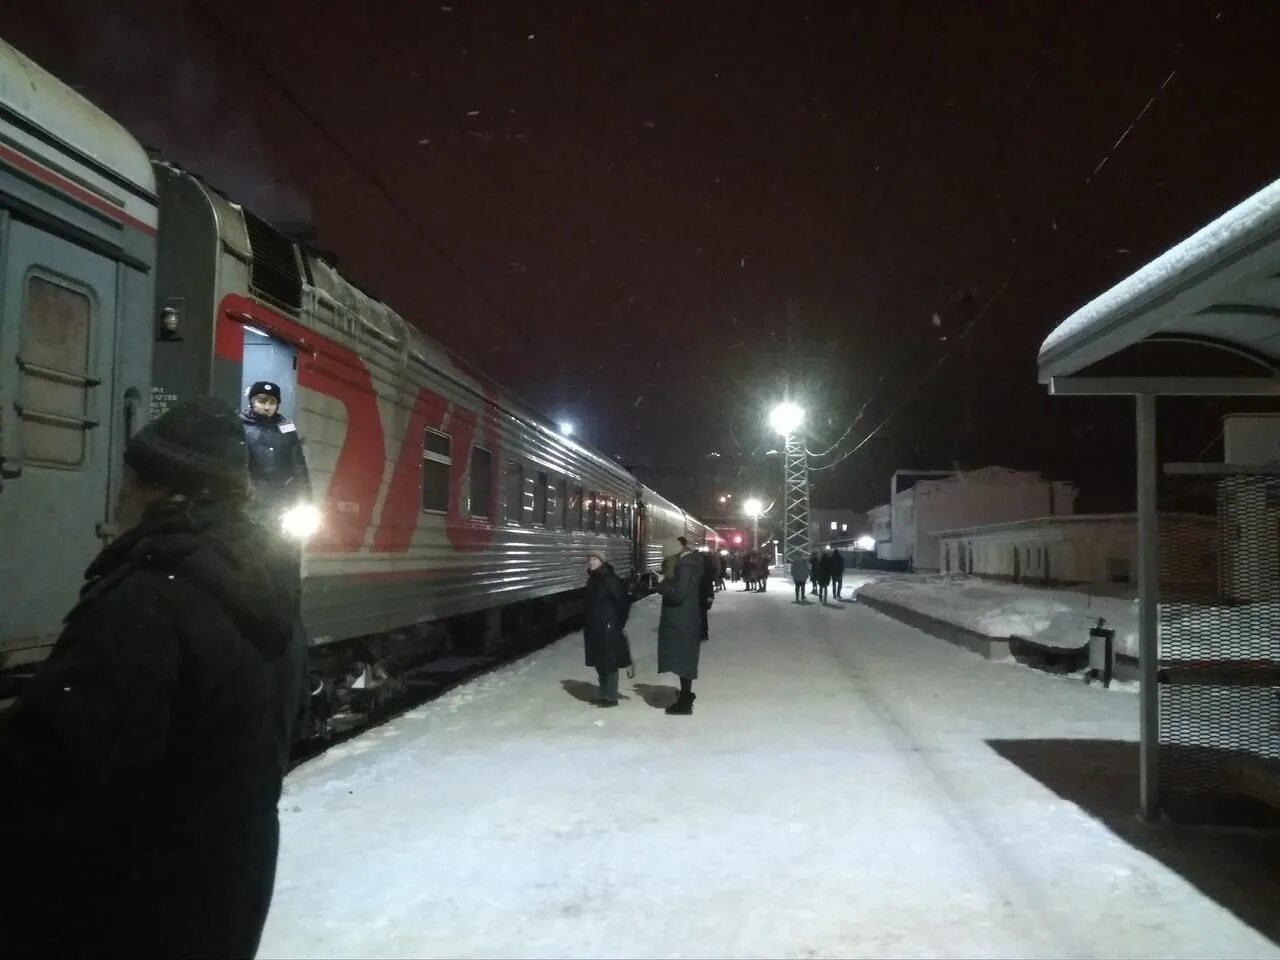 Новый поезд кострома. Кострома ЖД вокзал зима. Ночной вокзал Кострома. Кострома новая ЖД вокзал. Поезда зимой вокзал Москва.